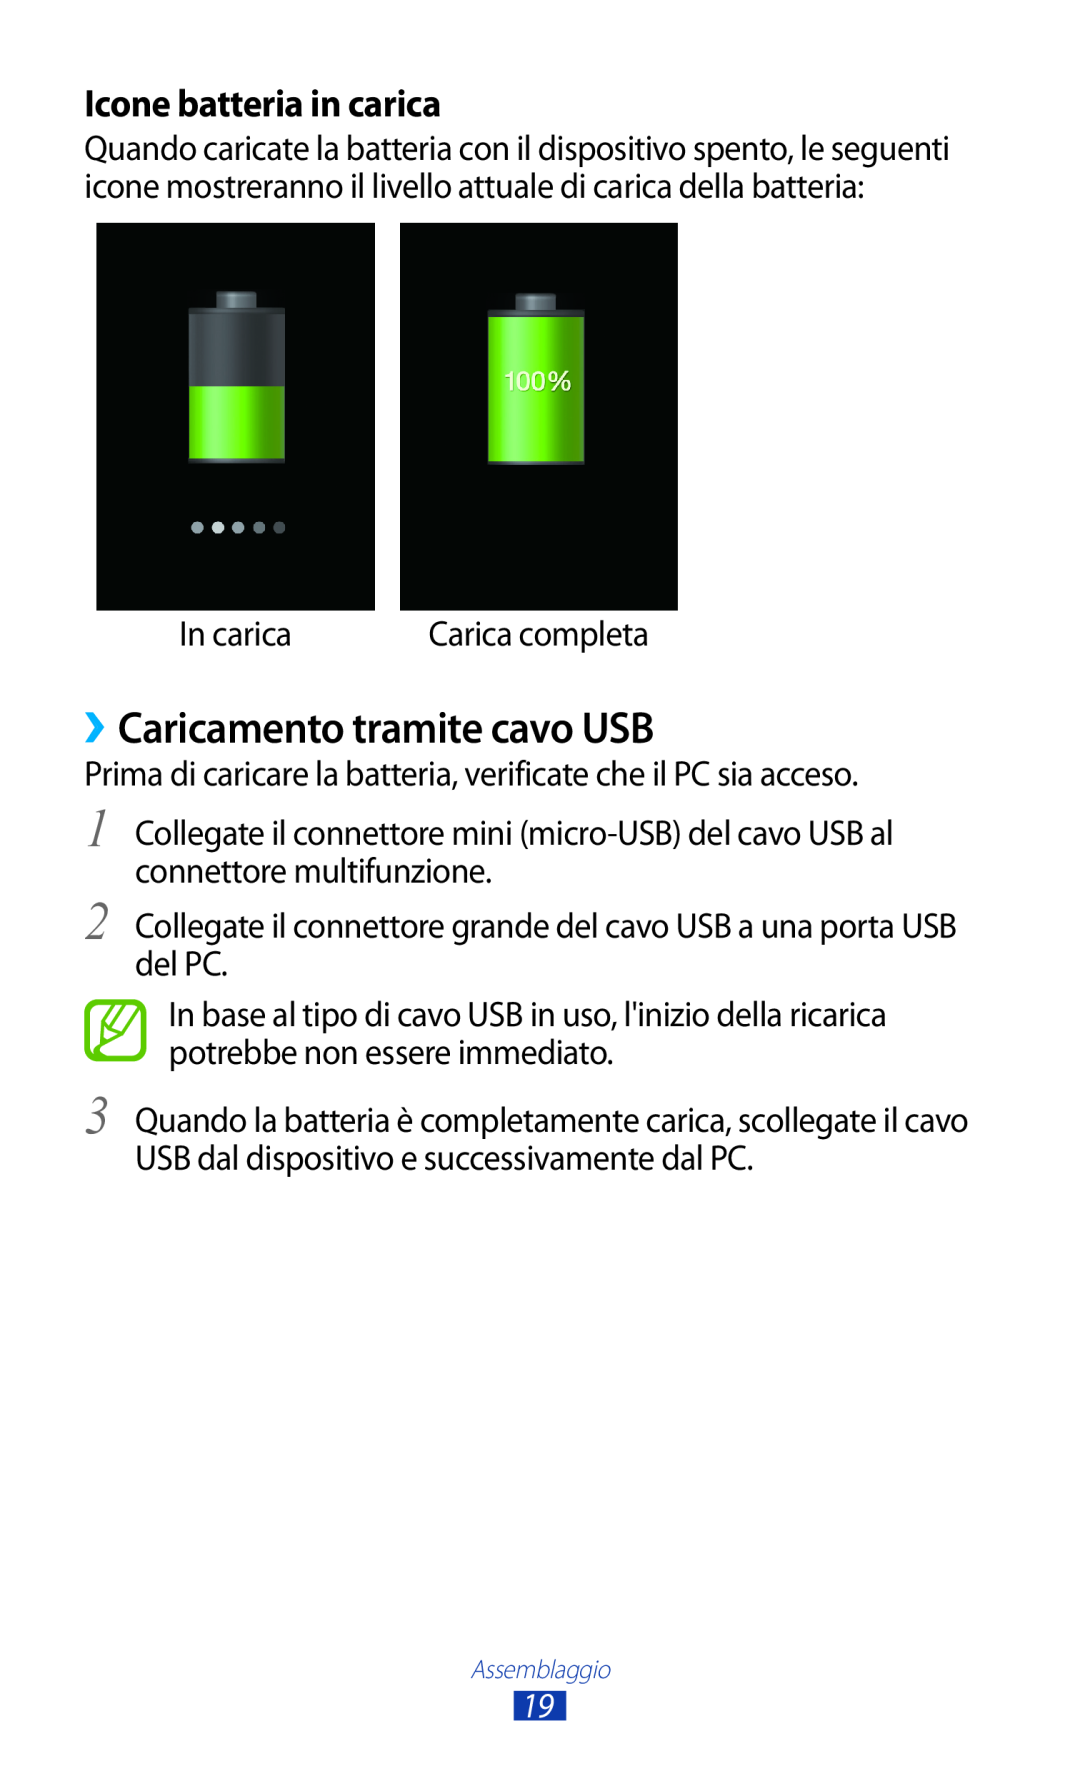 Samsung GT-S7560UWATIM, GT-S7560UWAWIN, GT-S7560ZKAXEO manual ››Caricamento tramite cavo USB, Icone batteria in carica 